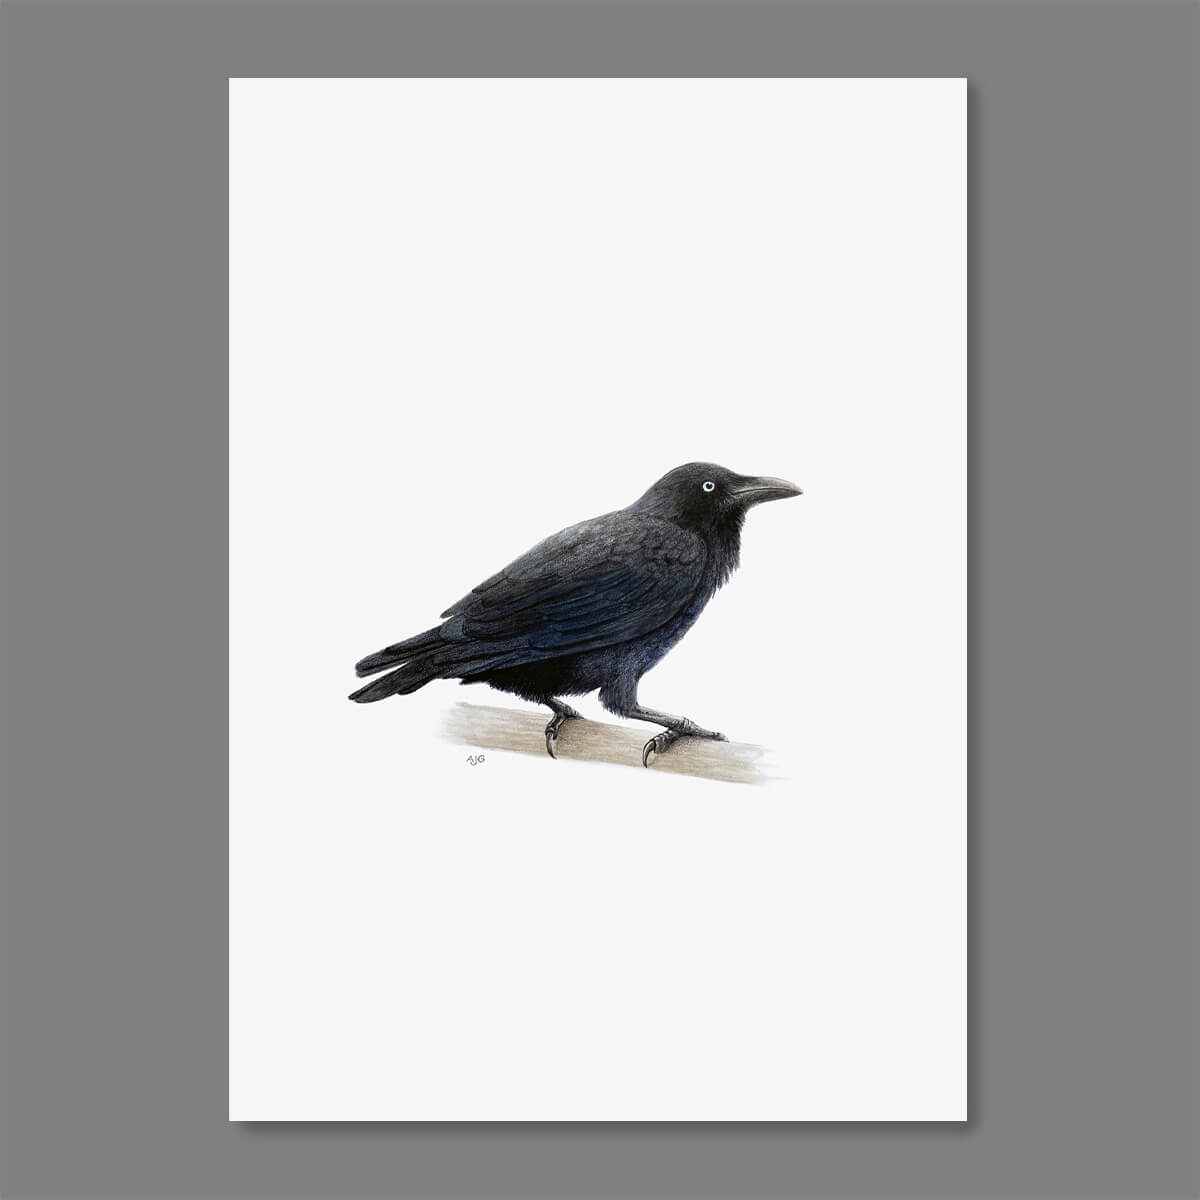 Australian raven crow original gouache and pencil painting by Amanda Gosse bird artist